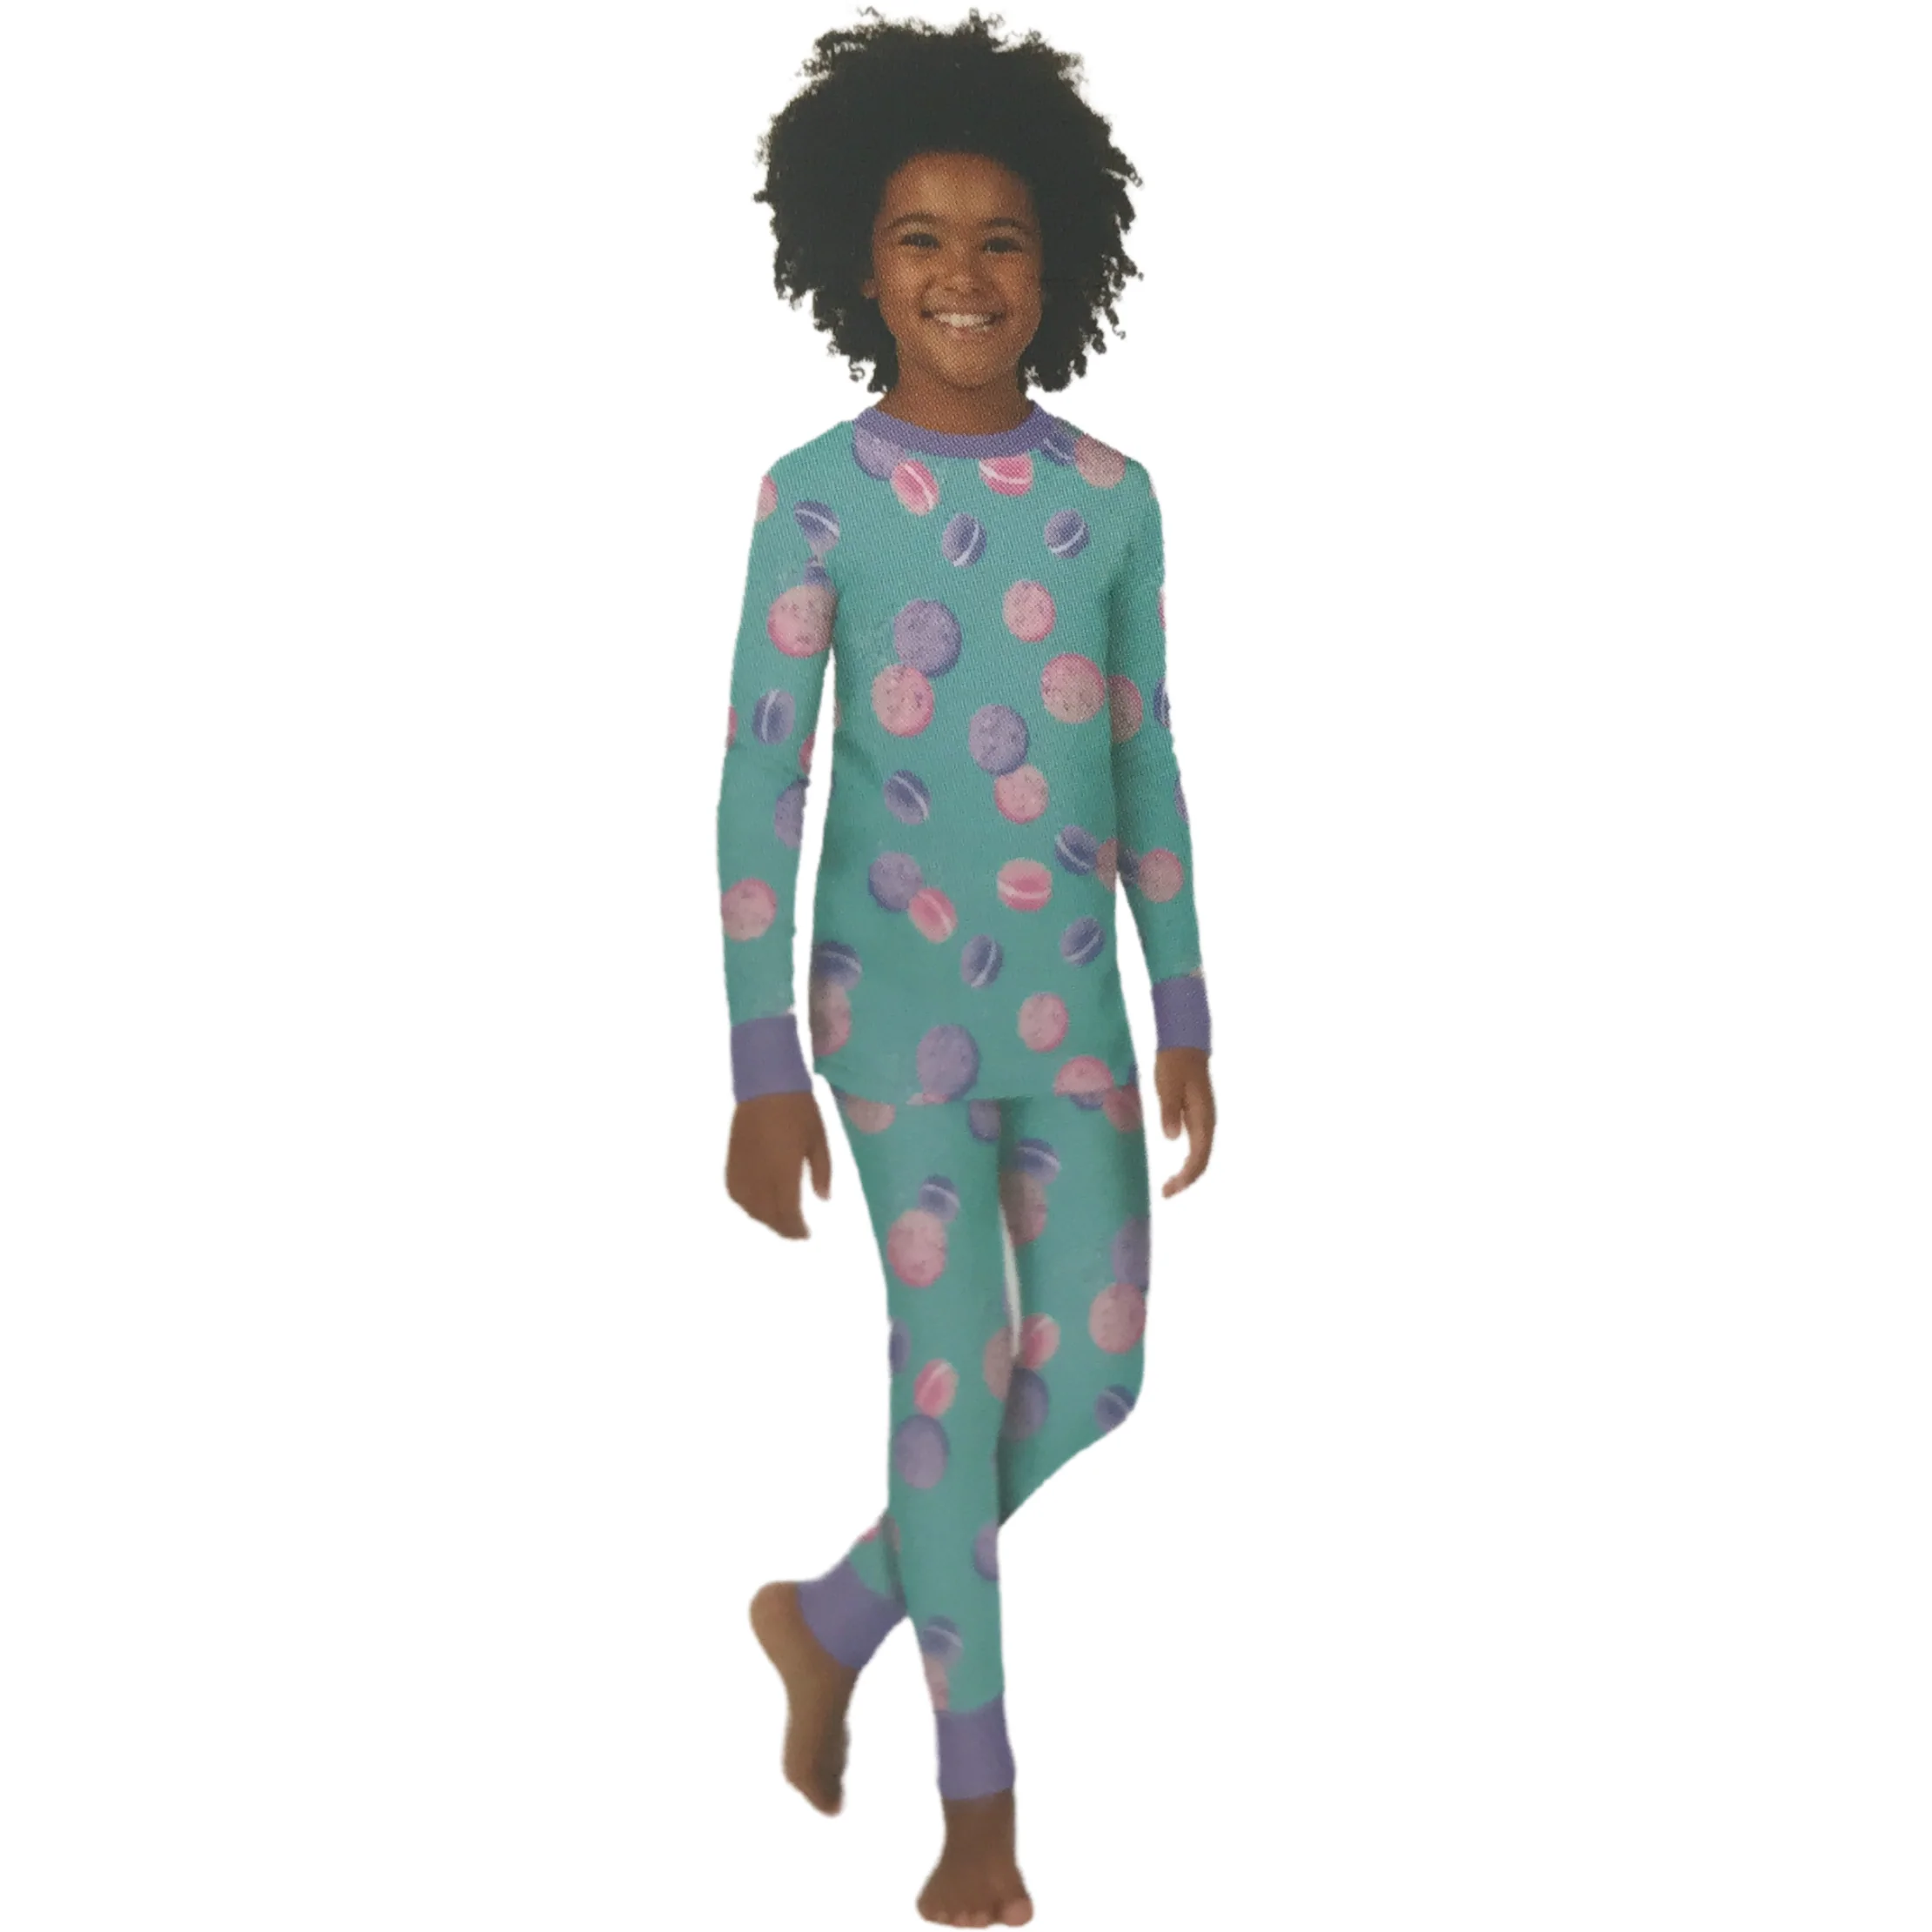 Kirkland Children's Pajama Set: 2 Pack / Size 6 / Purple & Teal